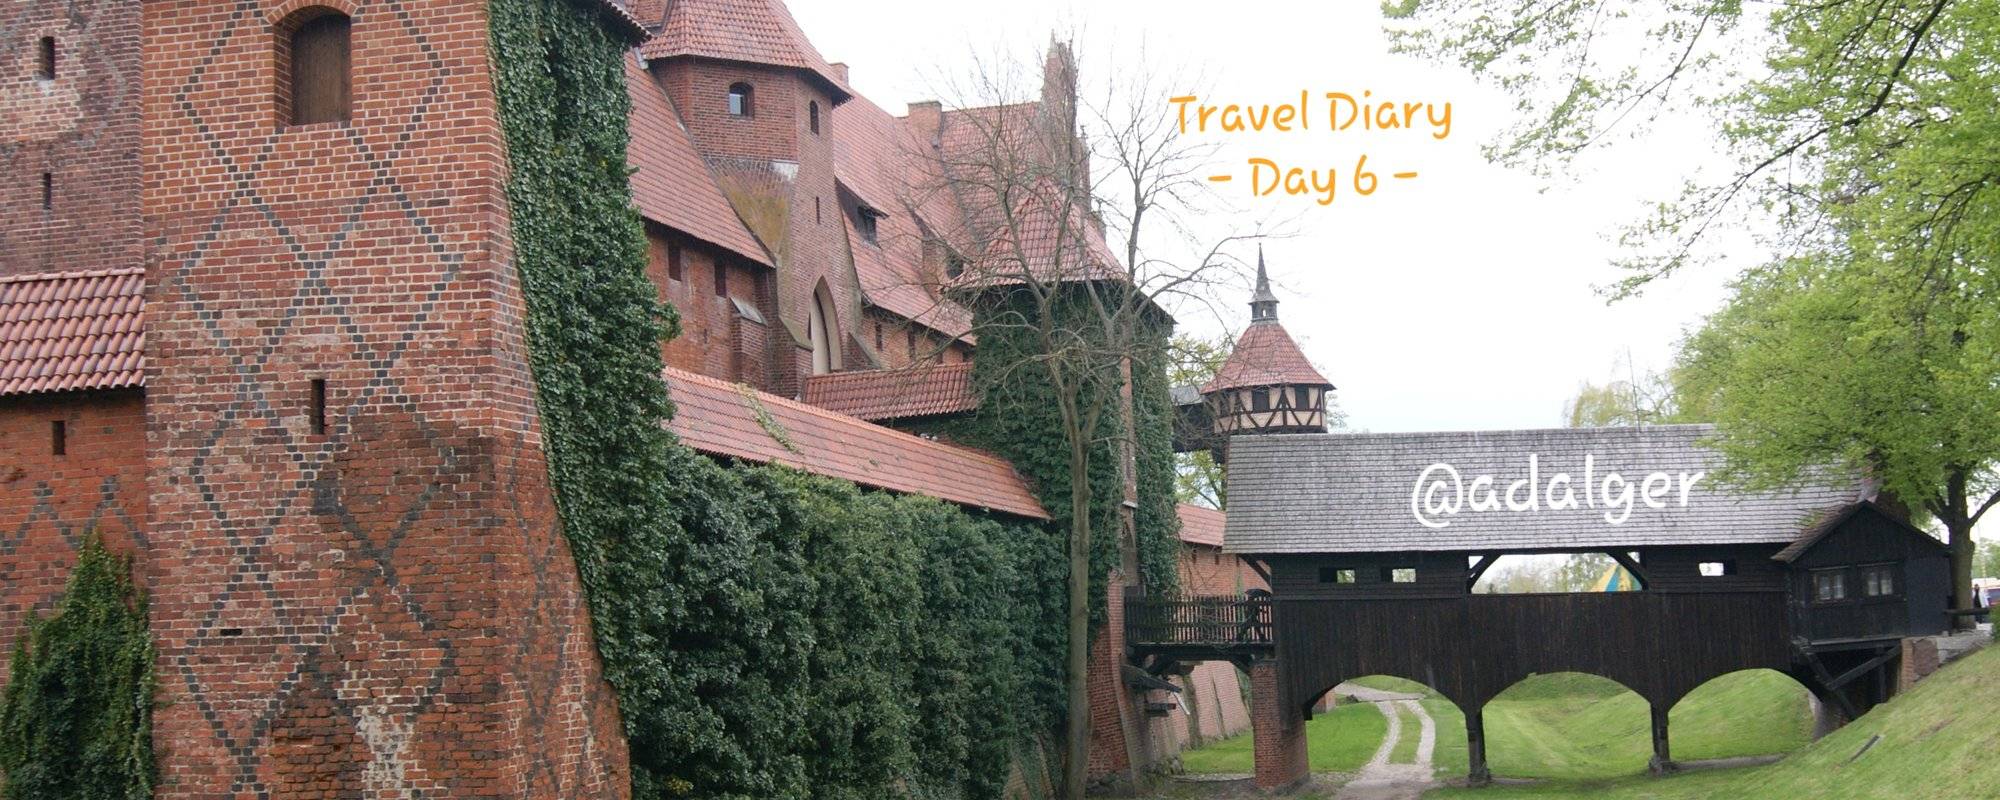 Travel Diary - Day 6 : Malbork Castle, Headquarter of the Teutonic Order